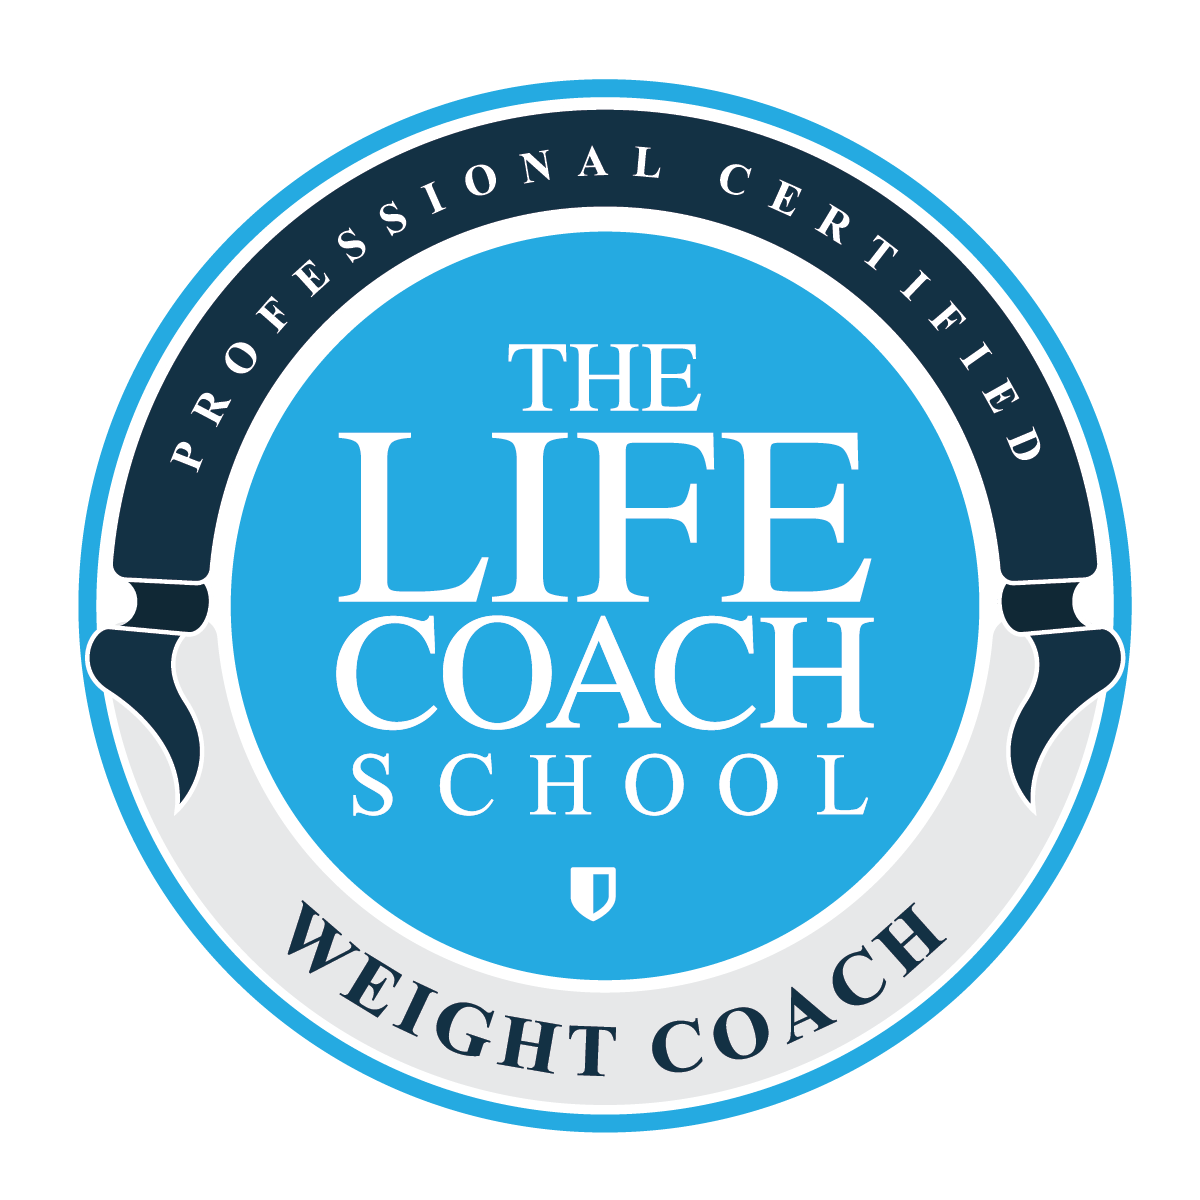 The Life Coach School